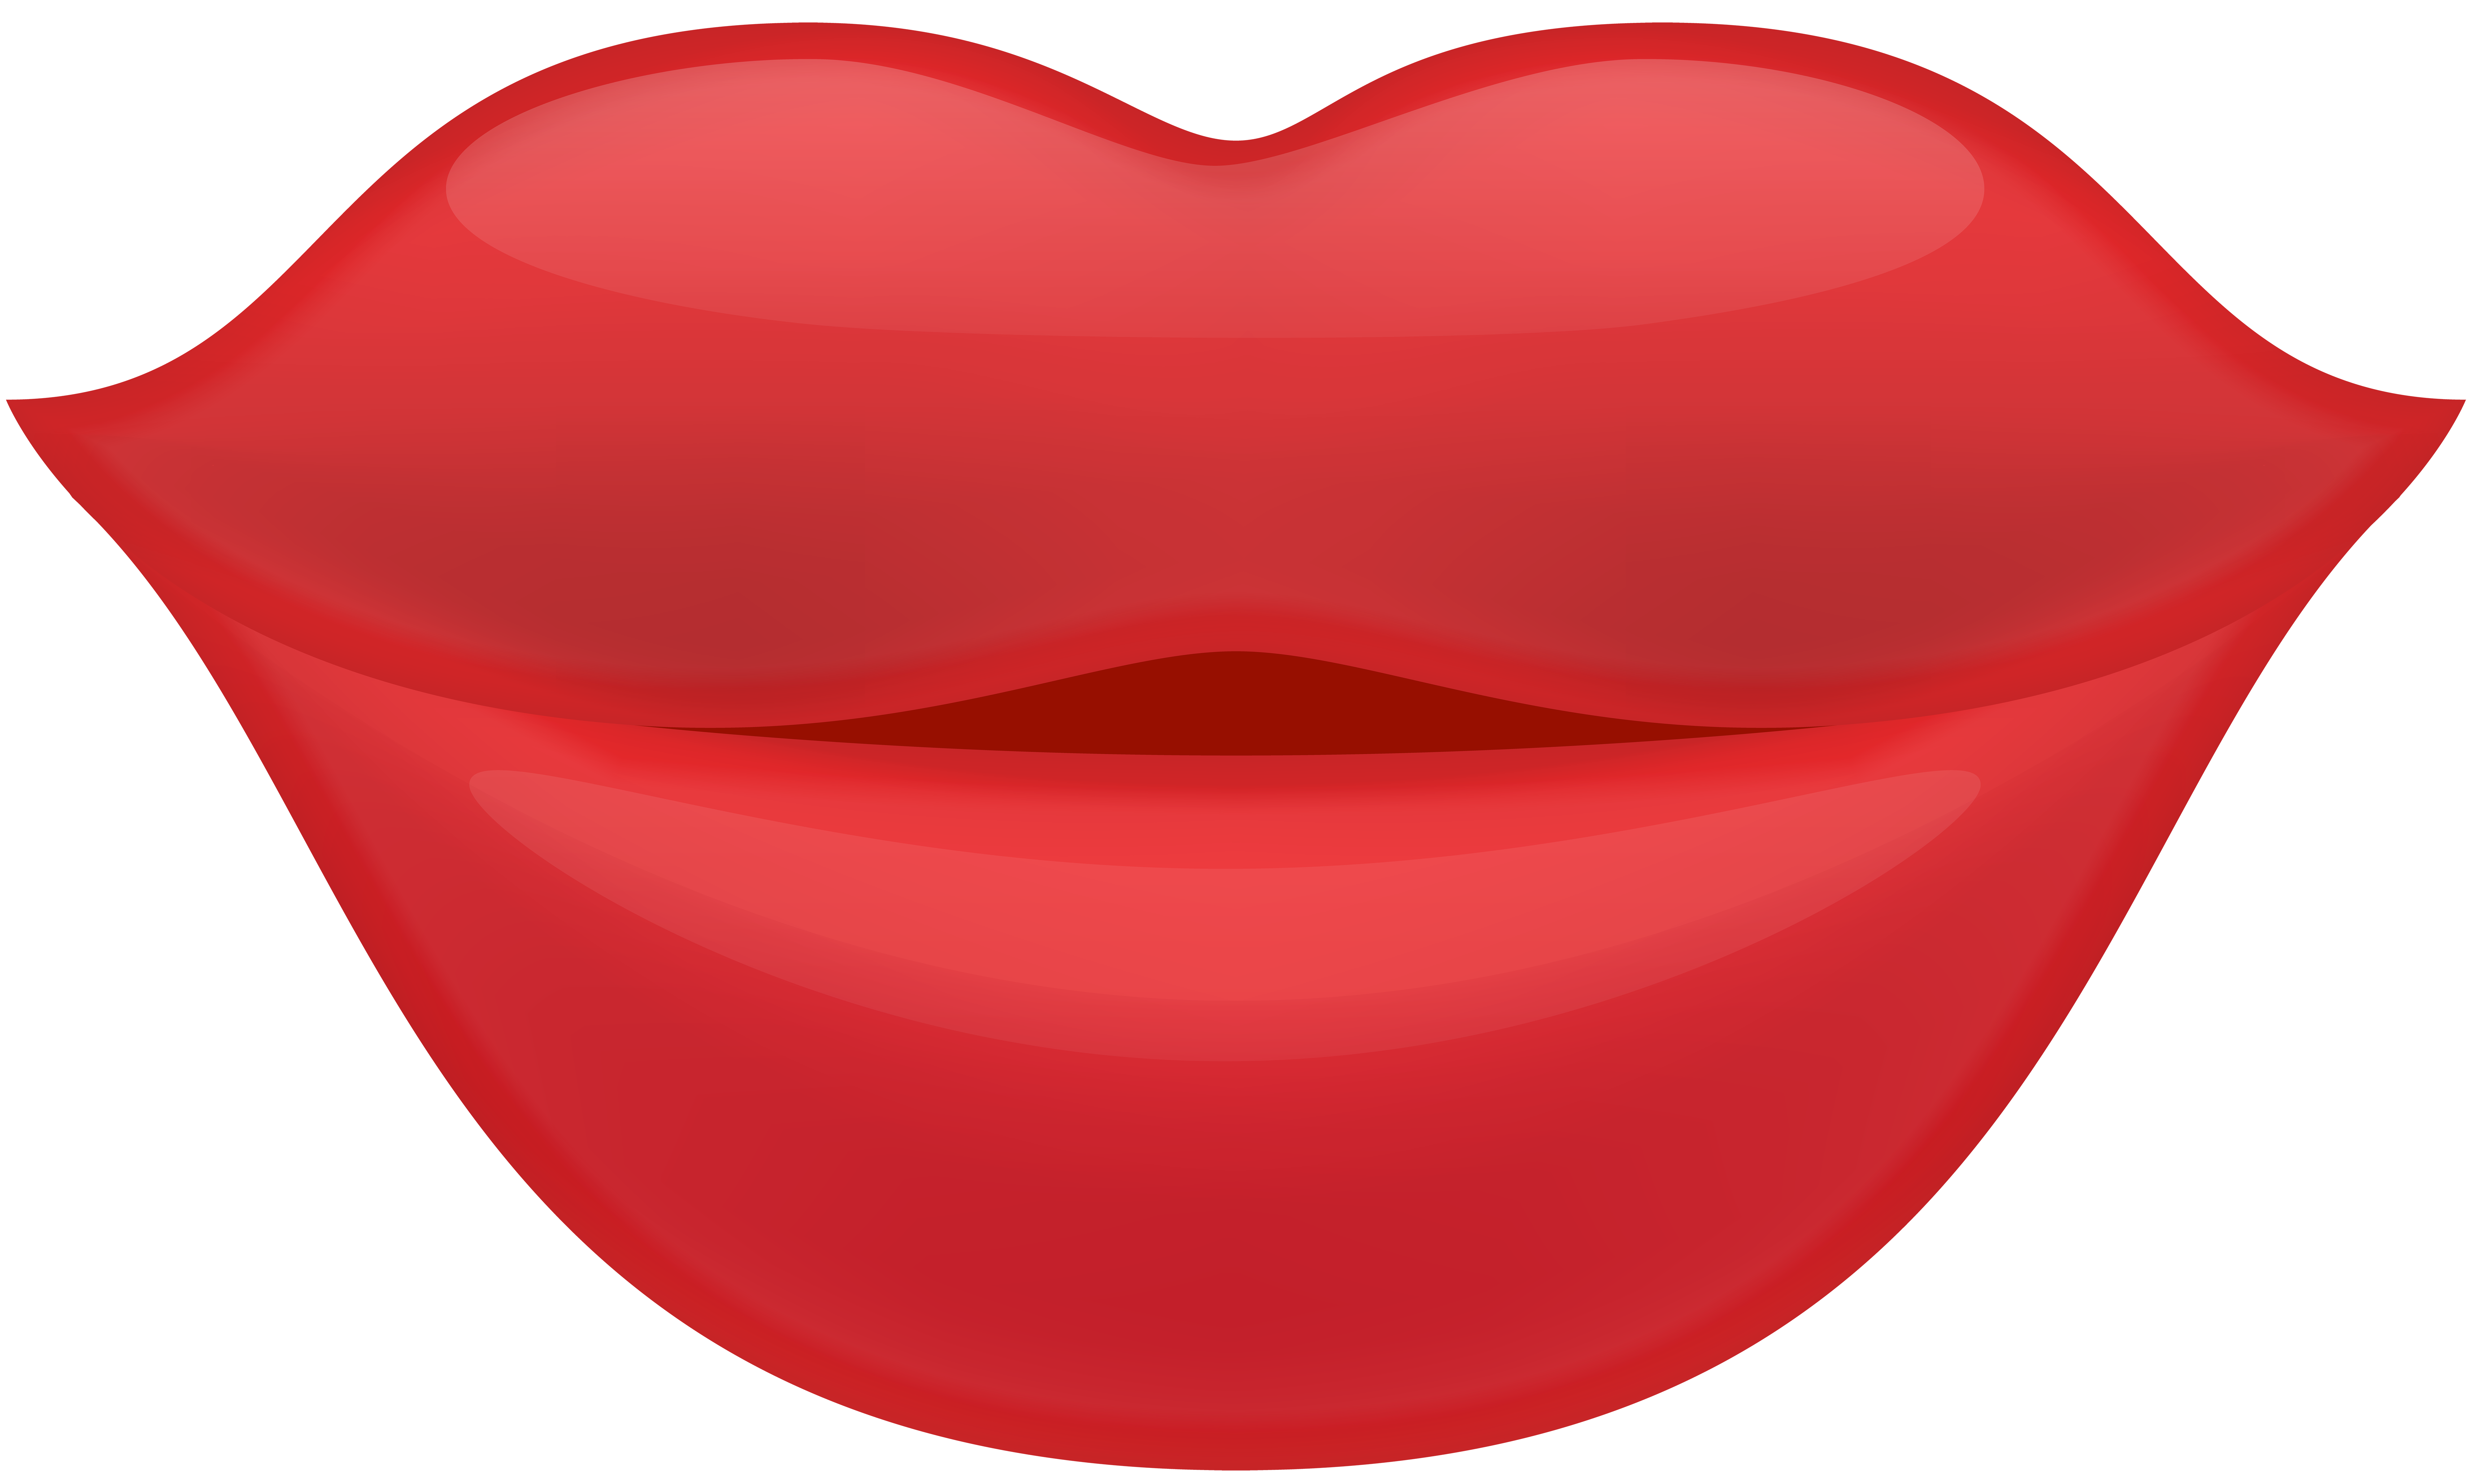 Lips PNG Clip Art Image.